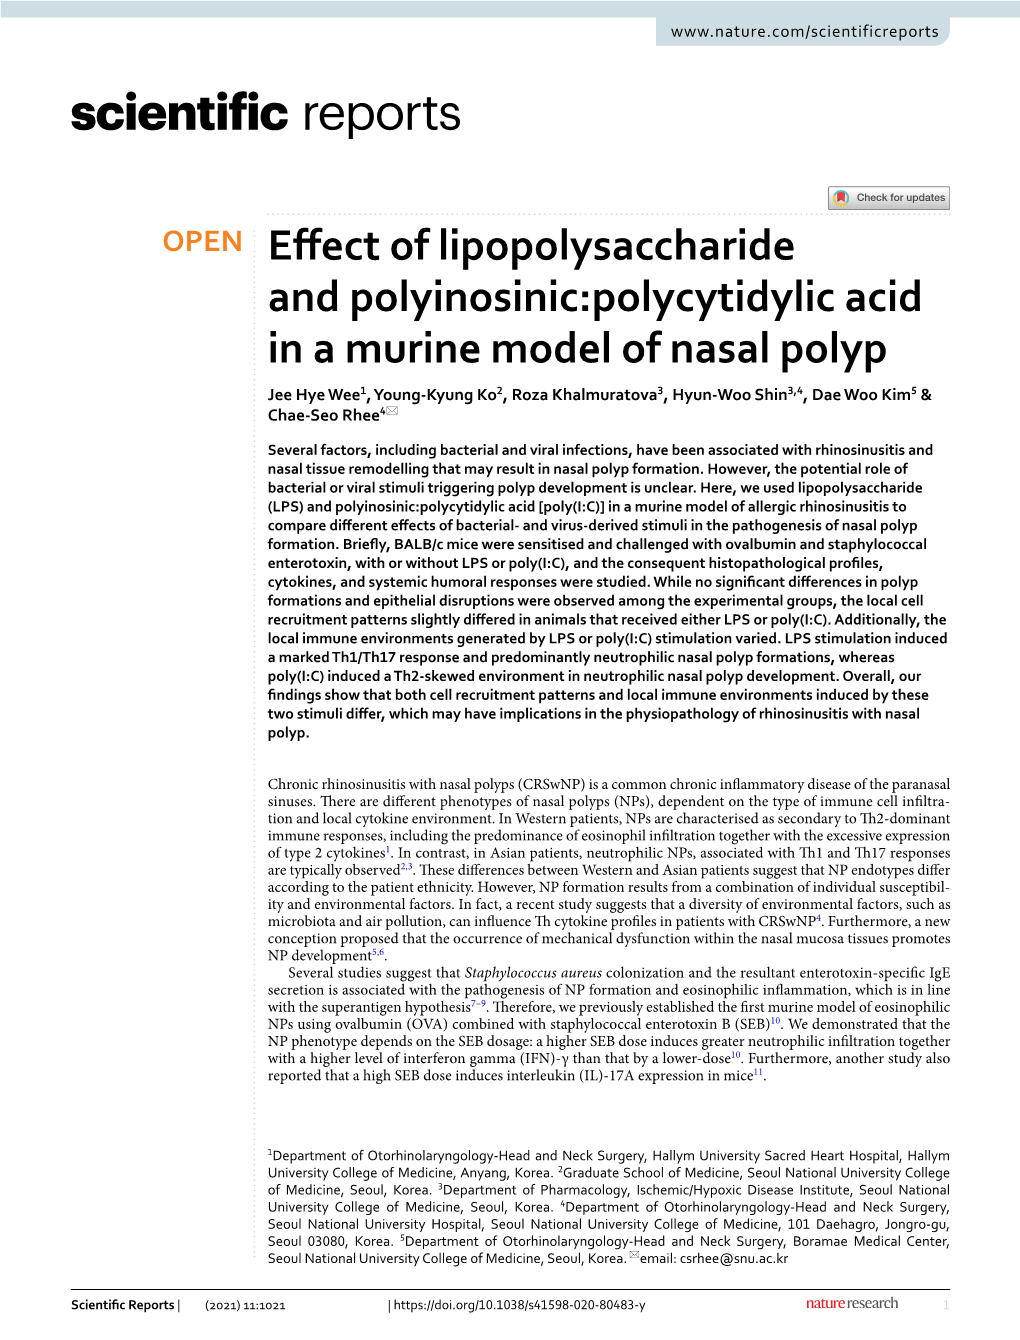 Effect of Lipopolysaccharide and Polyinosinic:Polycytidylic Acid in a Murine Model of Nasal Polyp